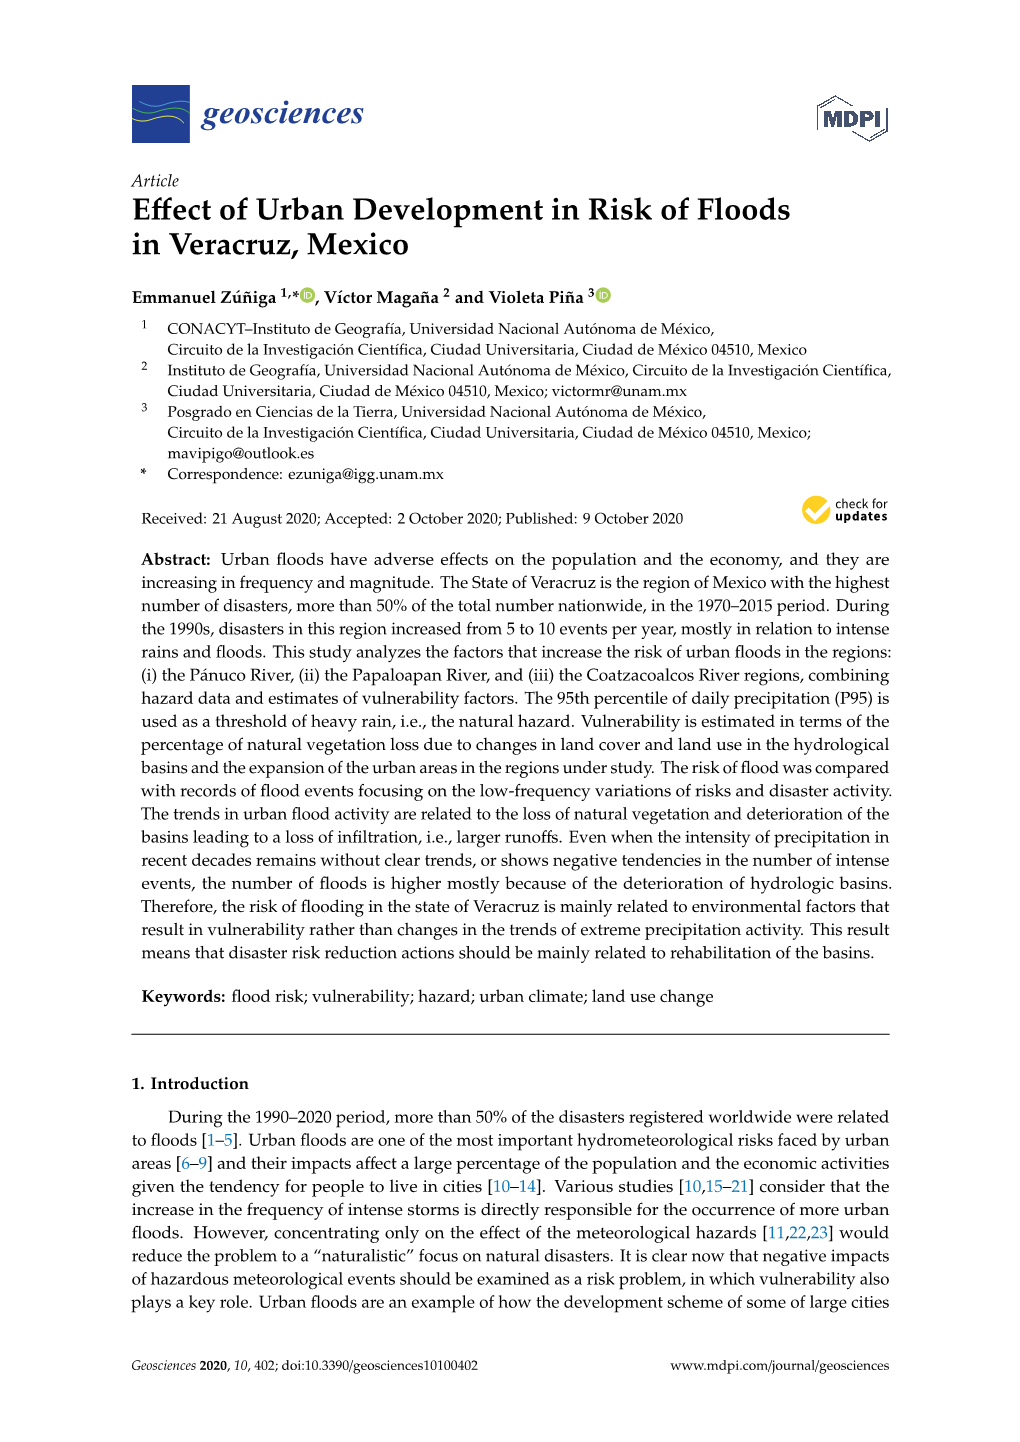 Effect of Urban Development in Risk of Floods in Veracruz, Mexico